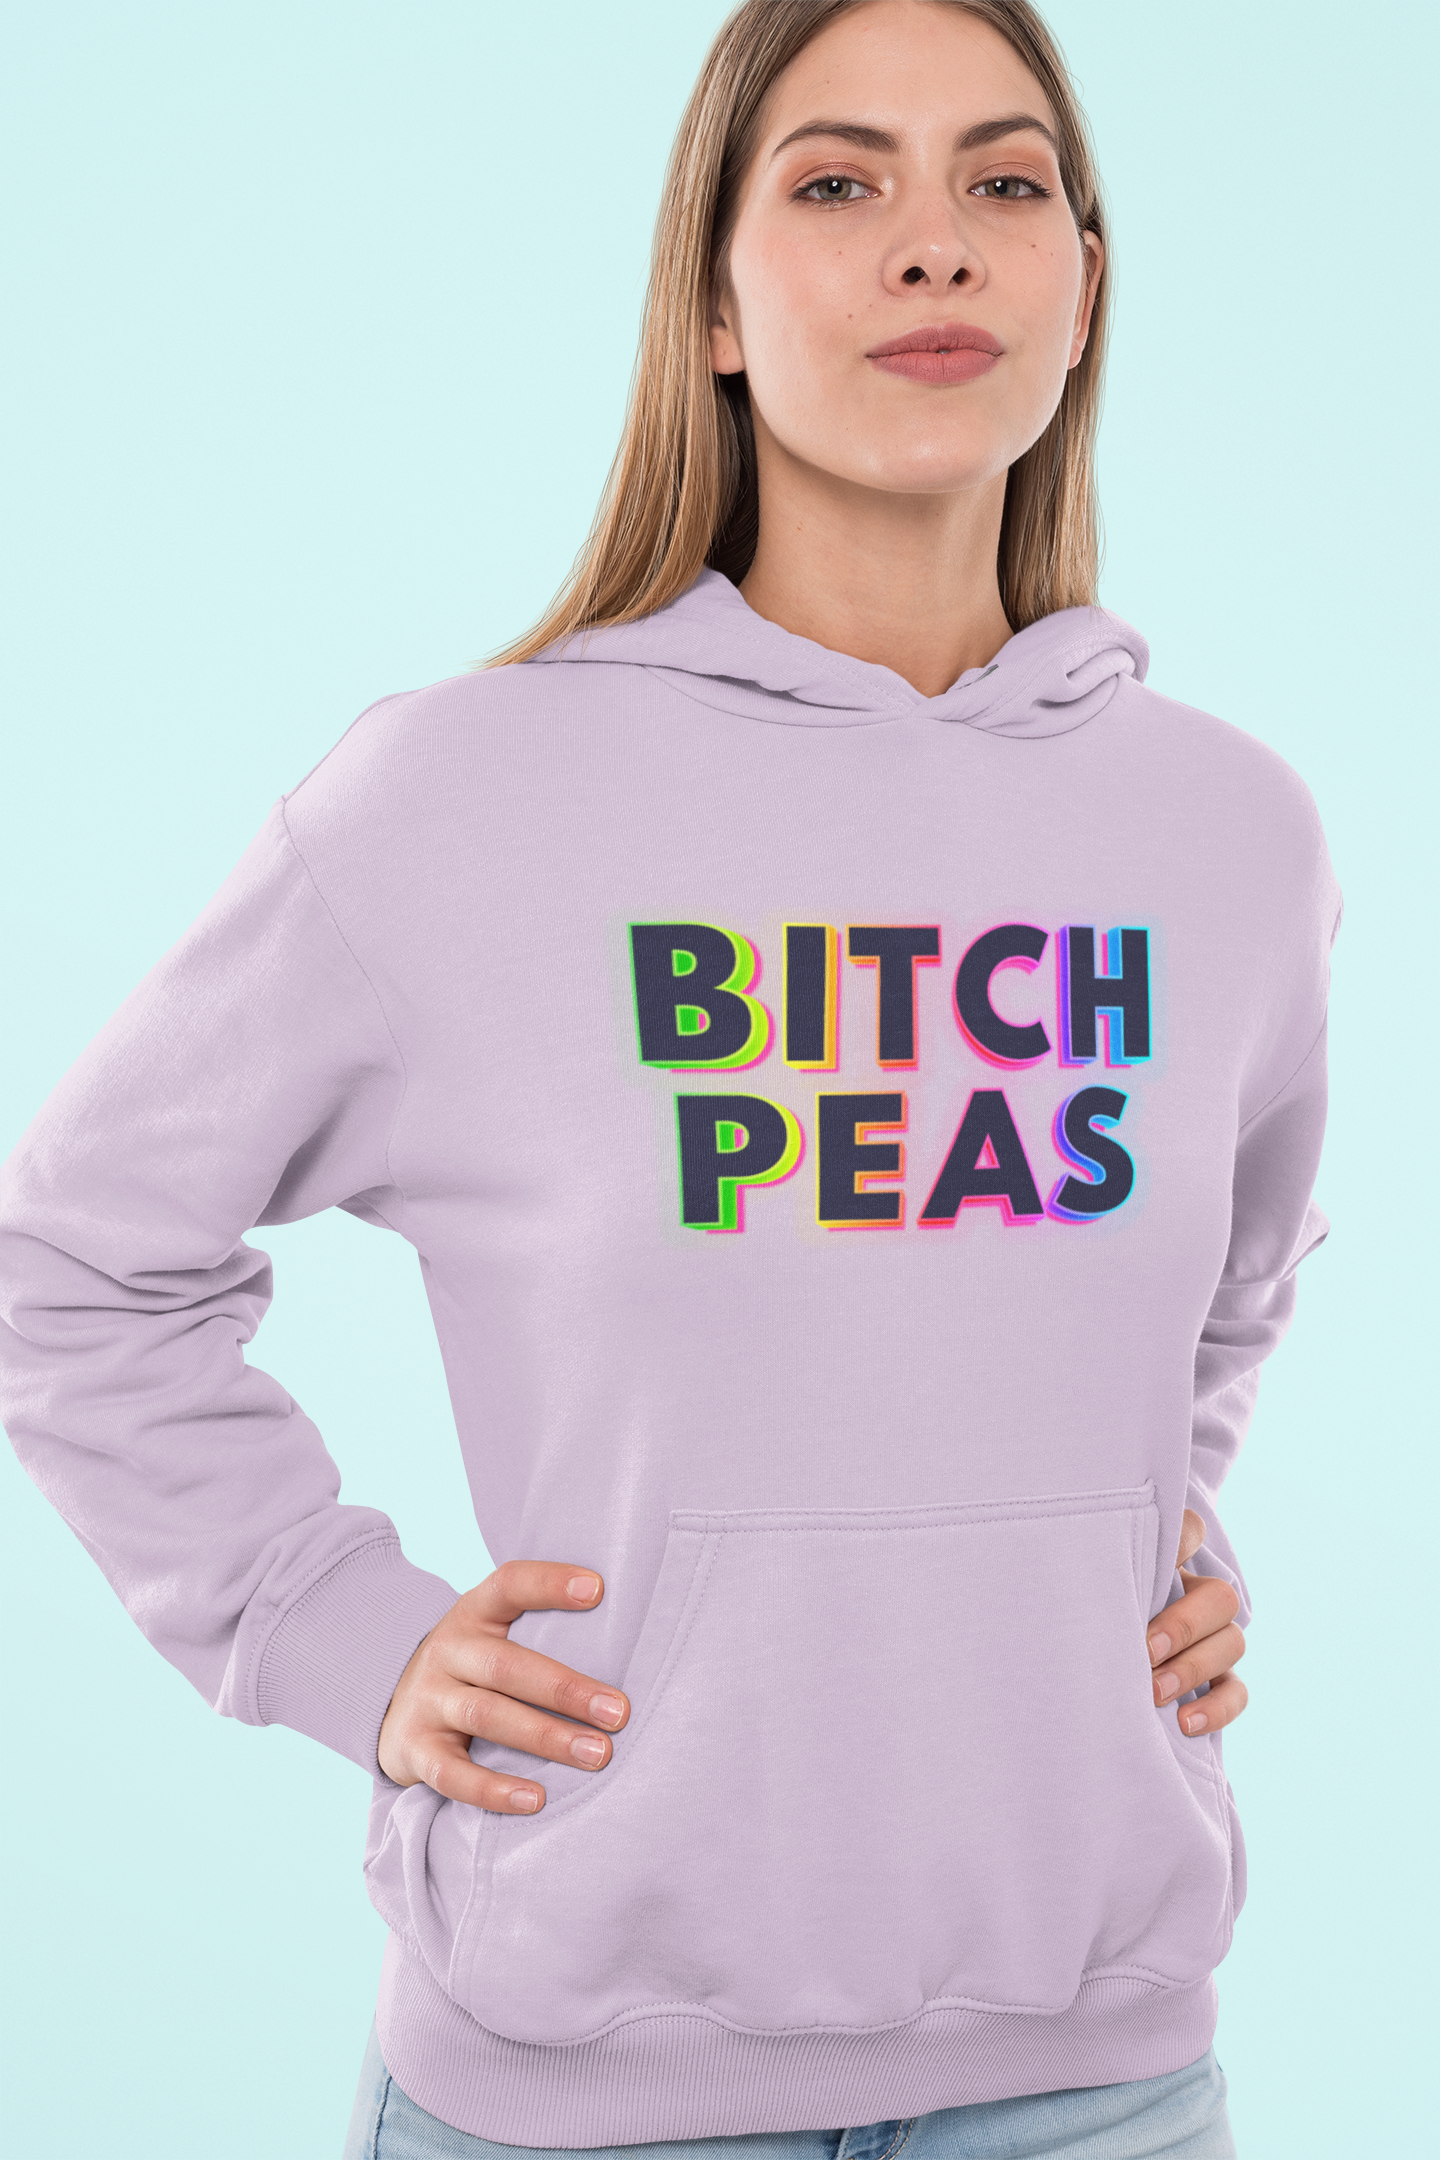 Bitch Peas Hoodie Women/Unisex